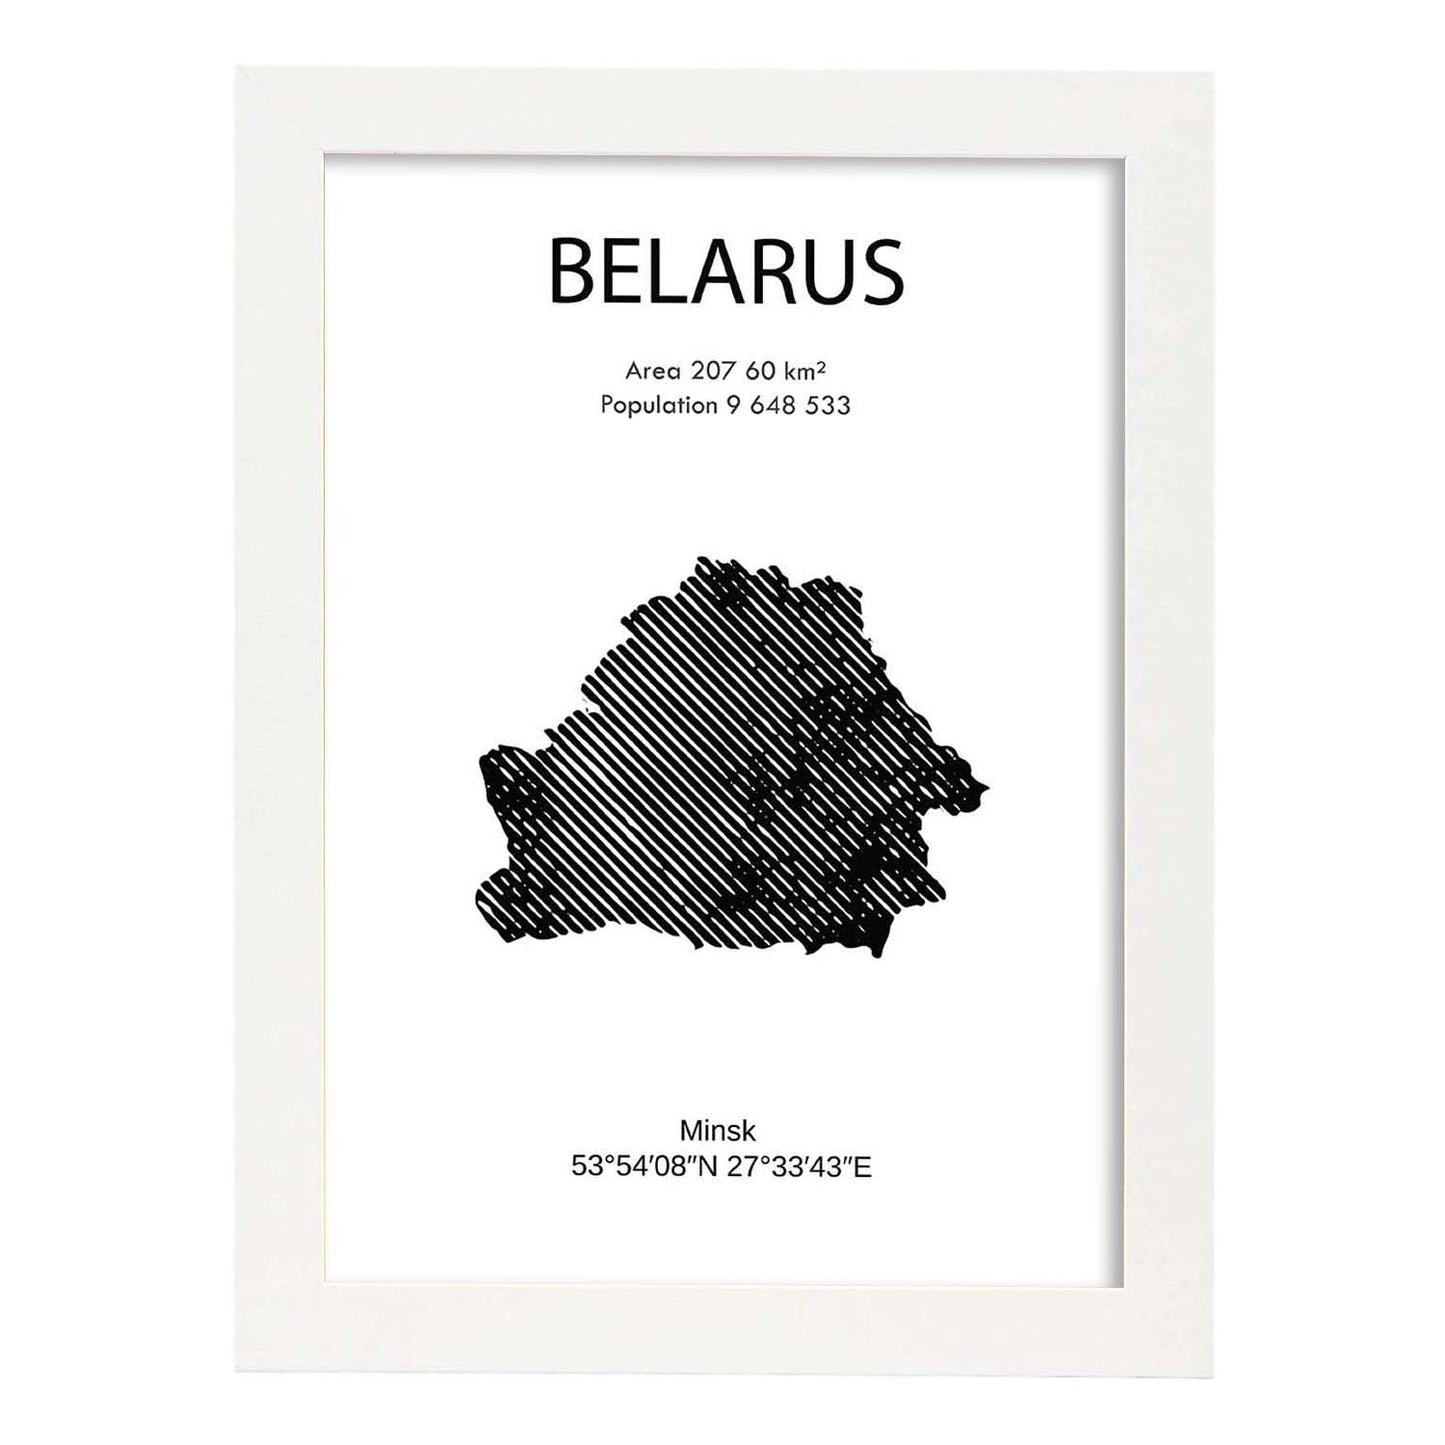 Poster de Belarus. Láminas de paises y continentes del mundo.-Artwork-Nacnic-A4-Marco Blanco-Nacnic Estudio SL